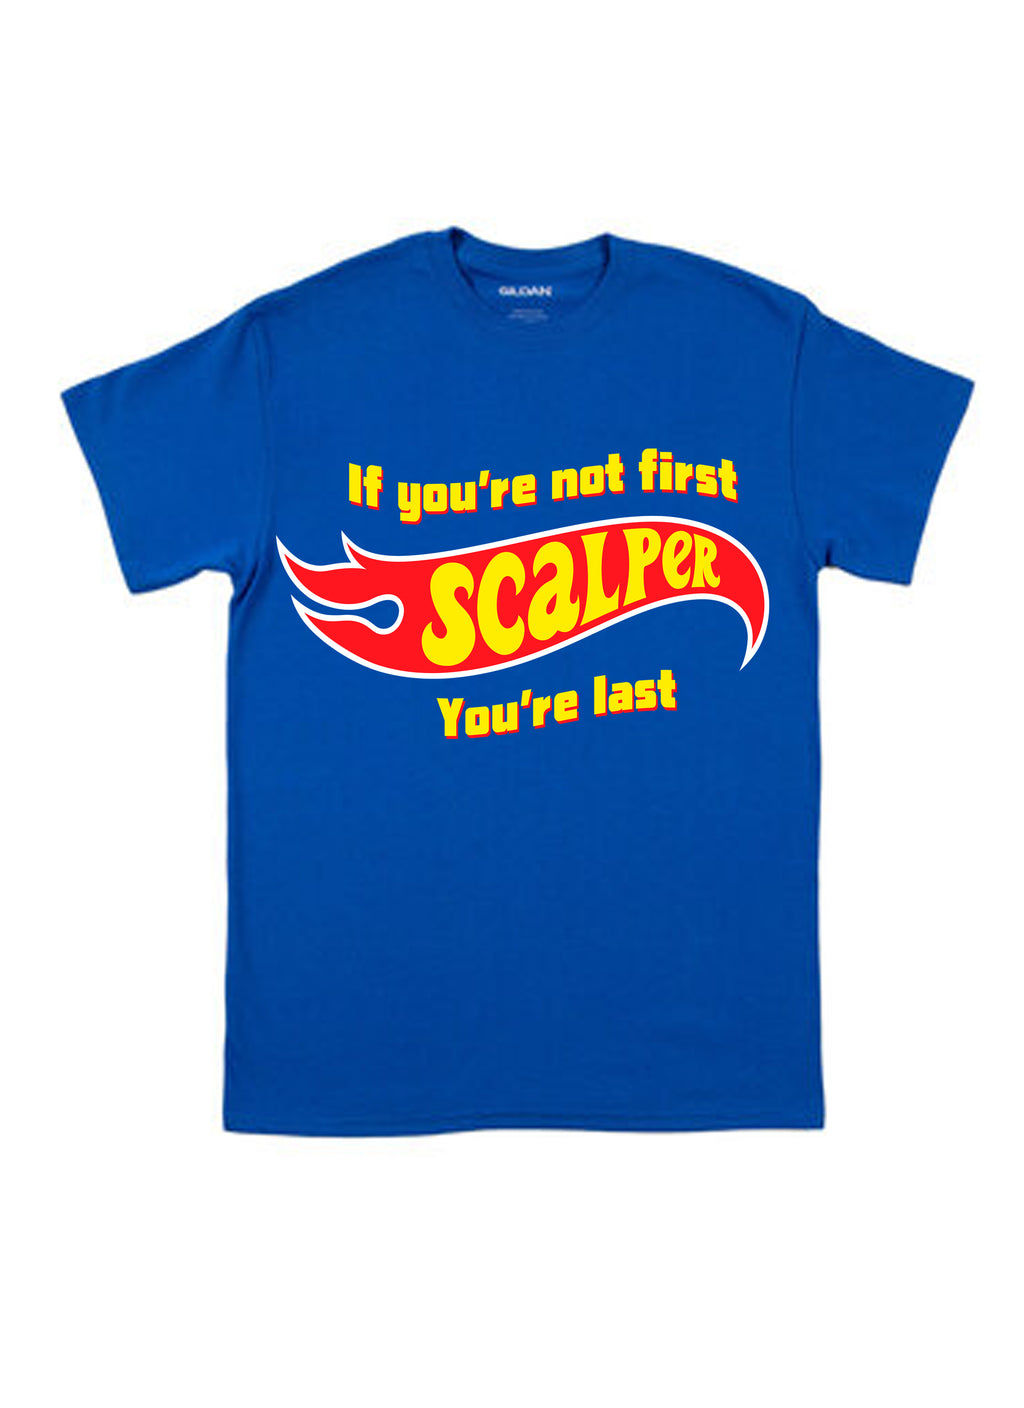 Scalper T-Shirt Size Extra Large